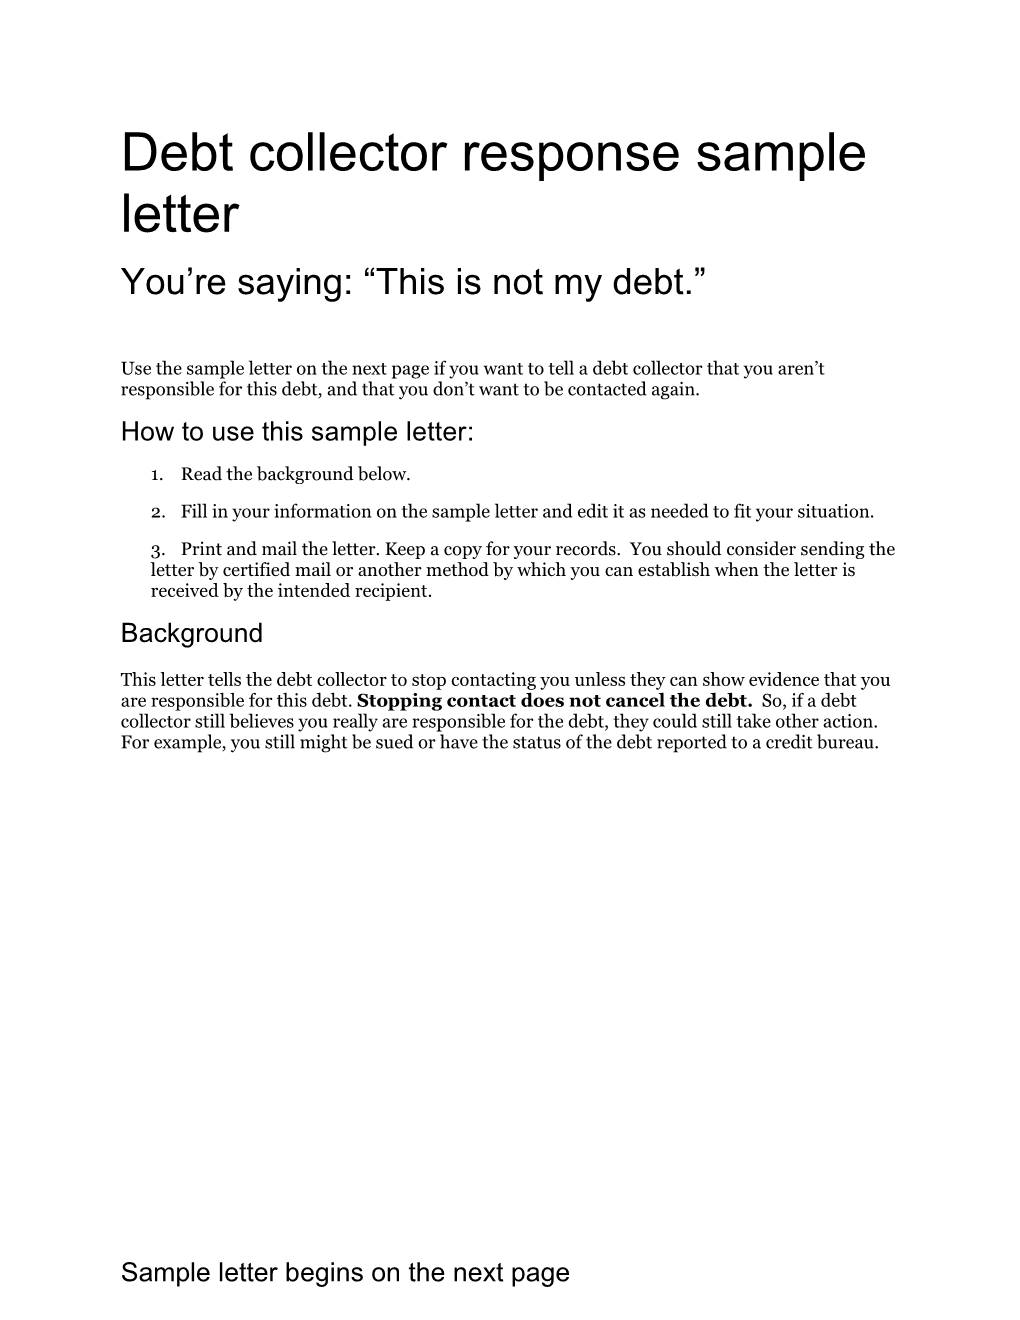 Debt Collector Response Sample Letter